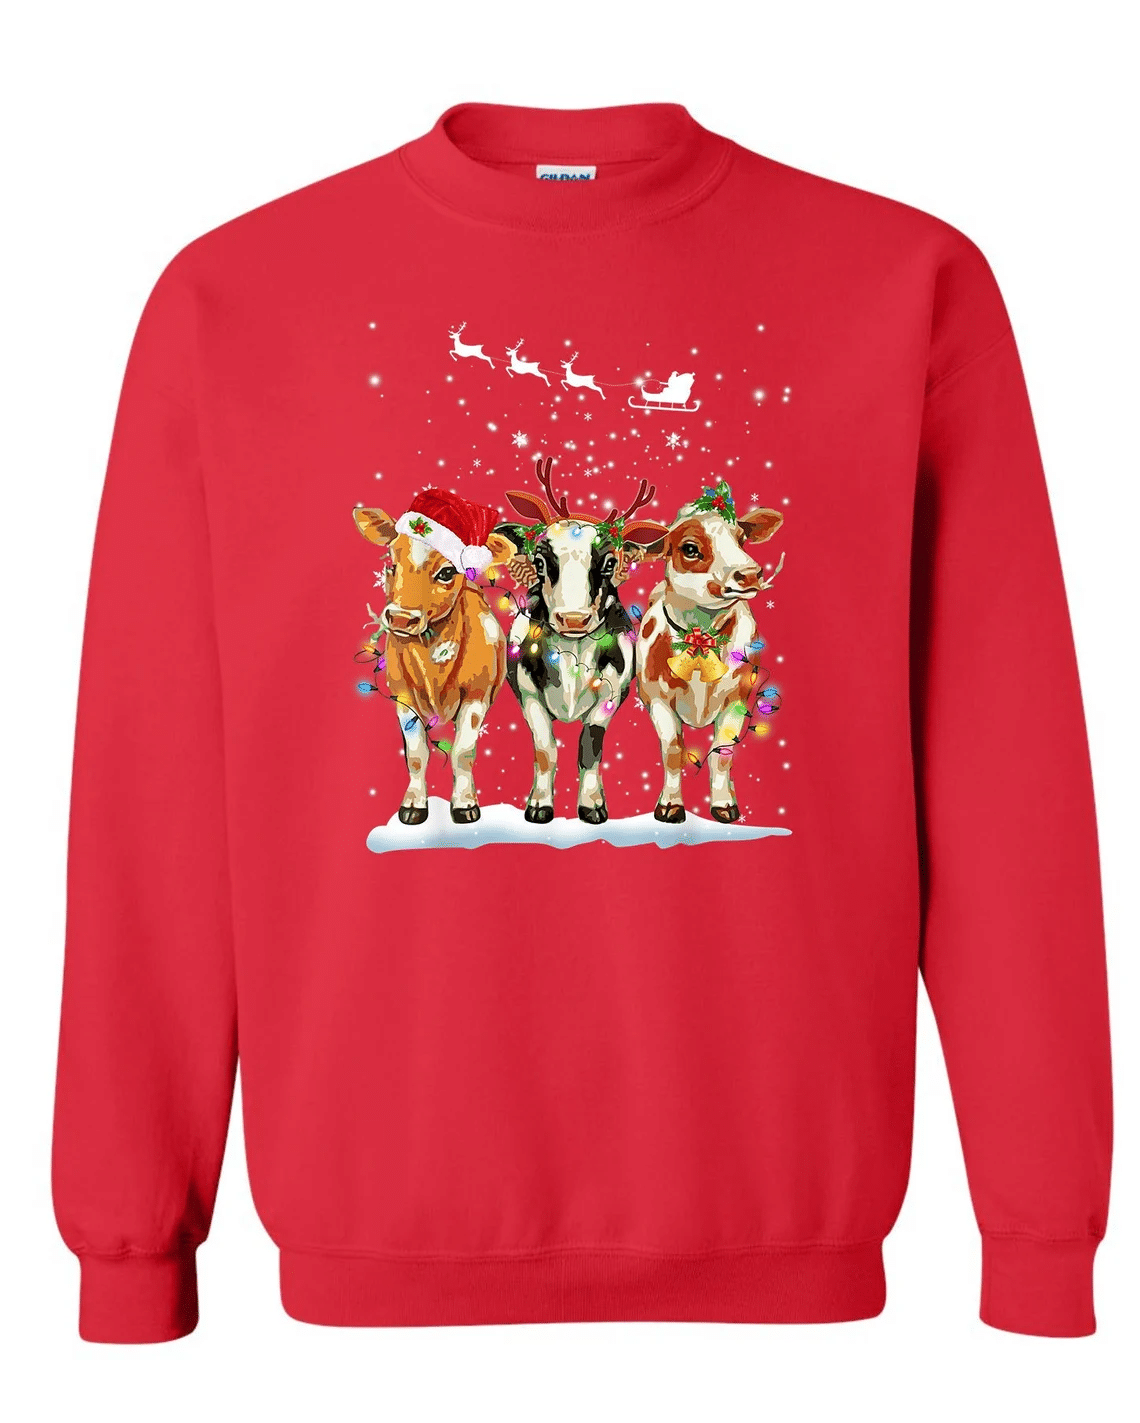 Cows Christmas Sweatshirt Style: Sweatshirt, Color: Red